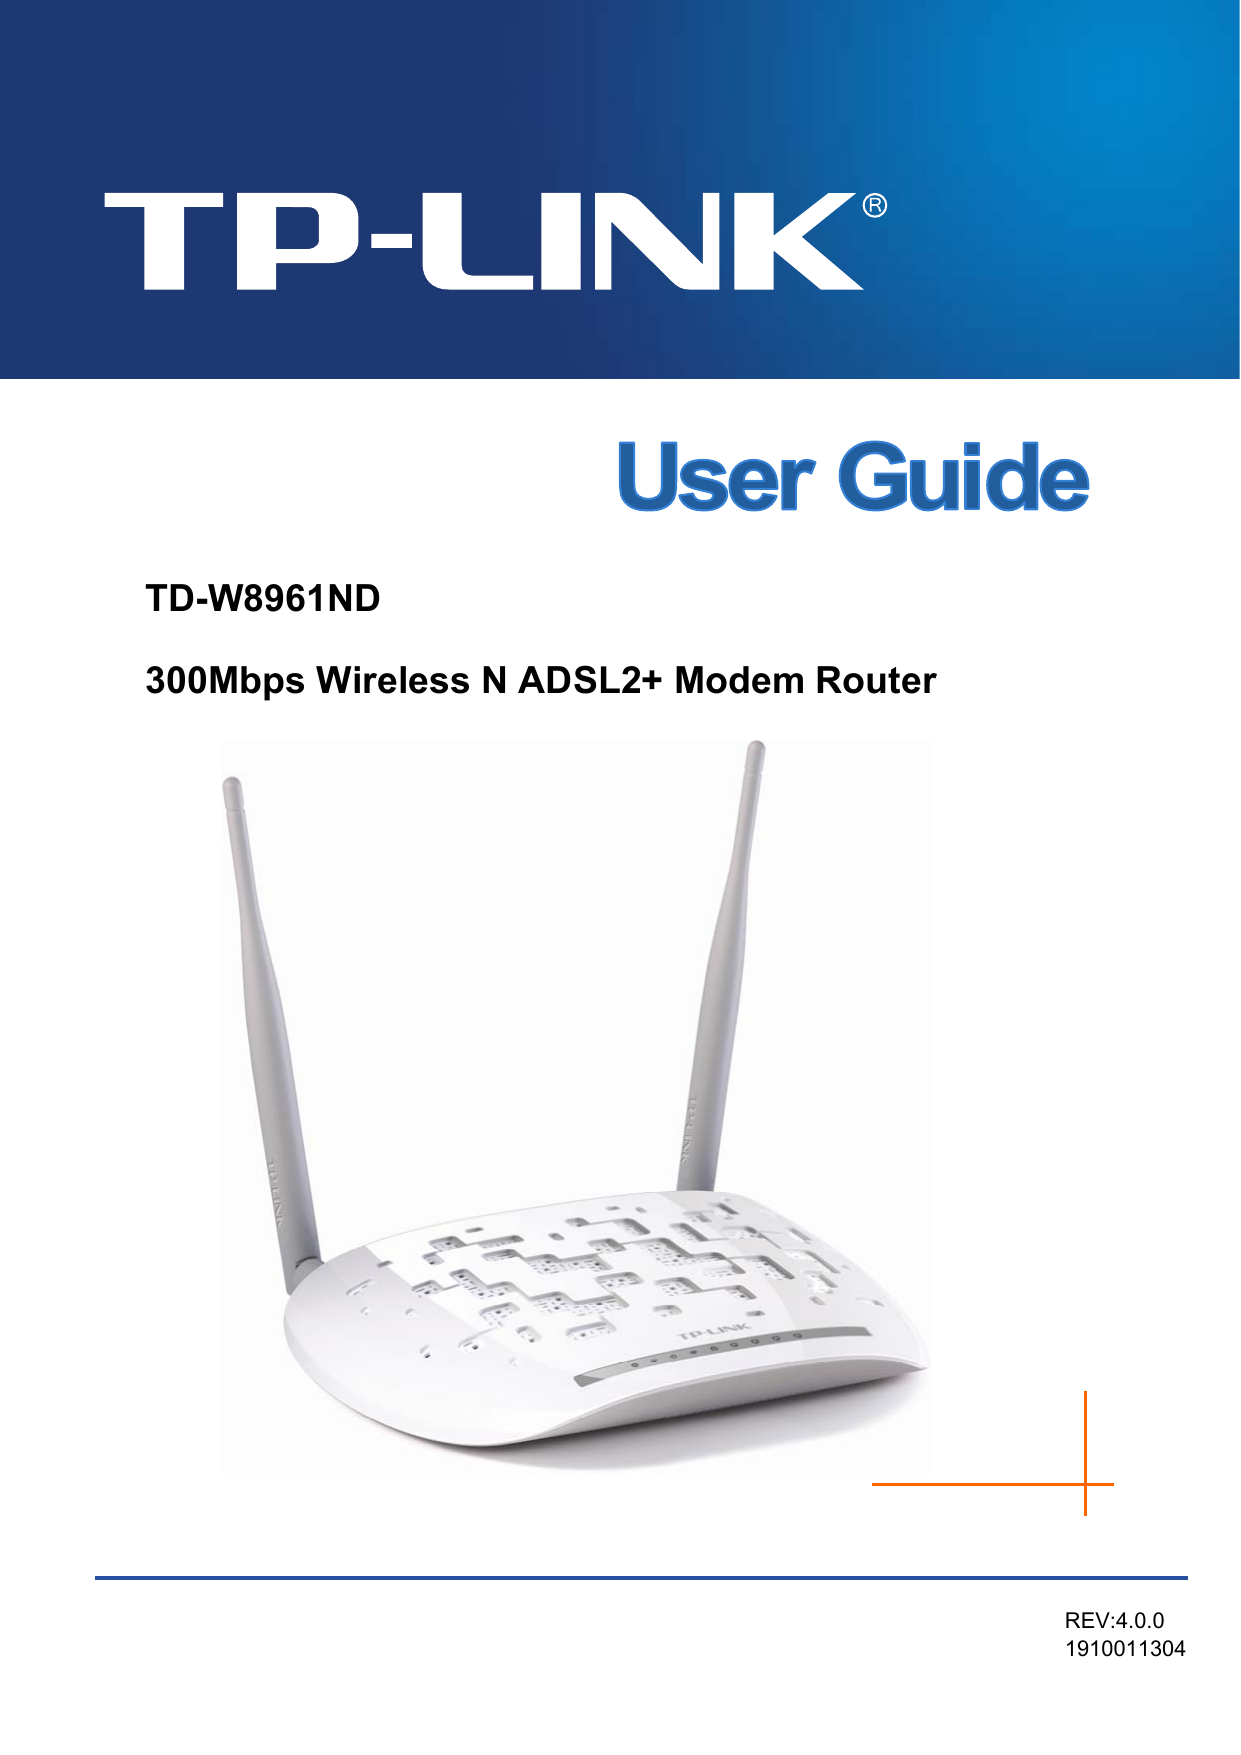   TD-W8961ND 300Mbps Wireless N ADSL2+ Modem Router  REV:4.0.0 1910011304 